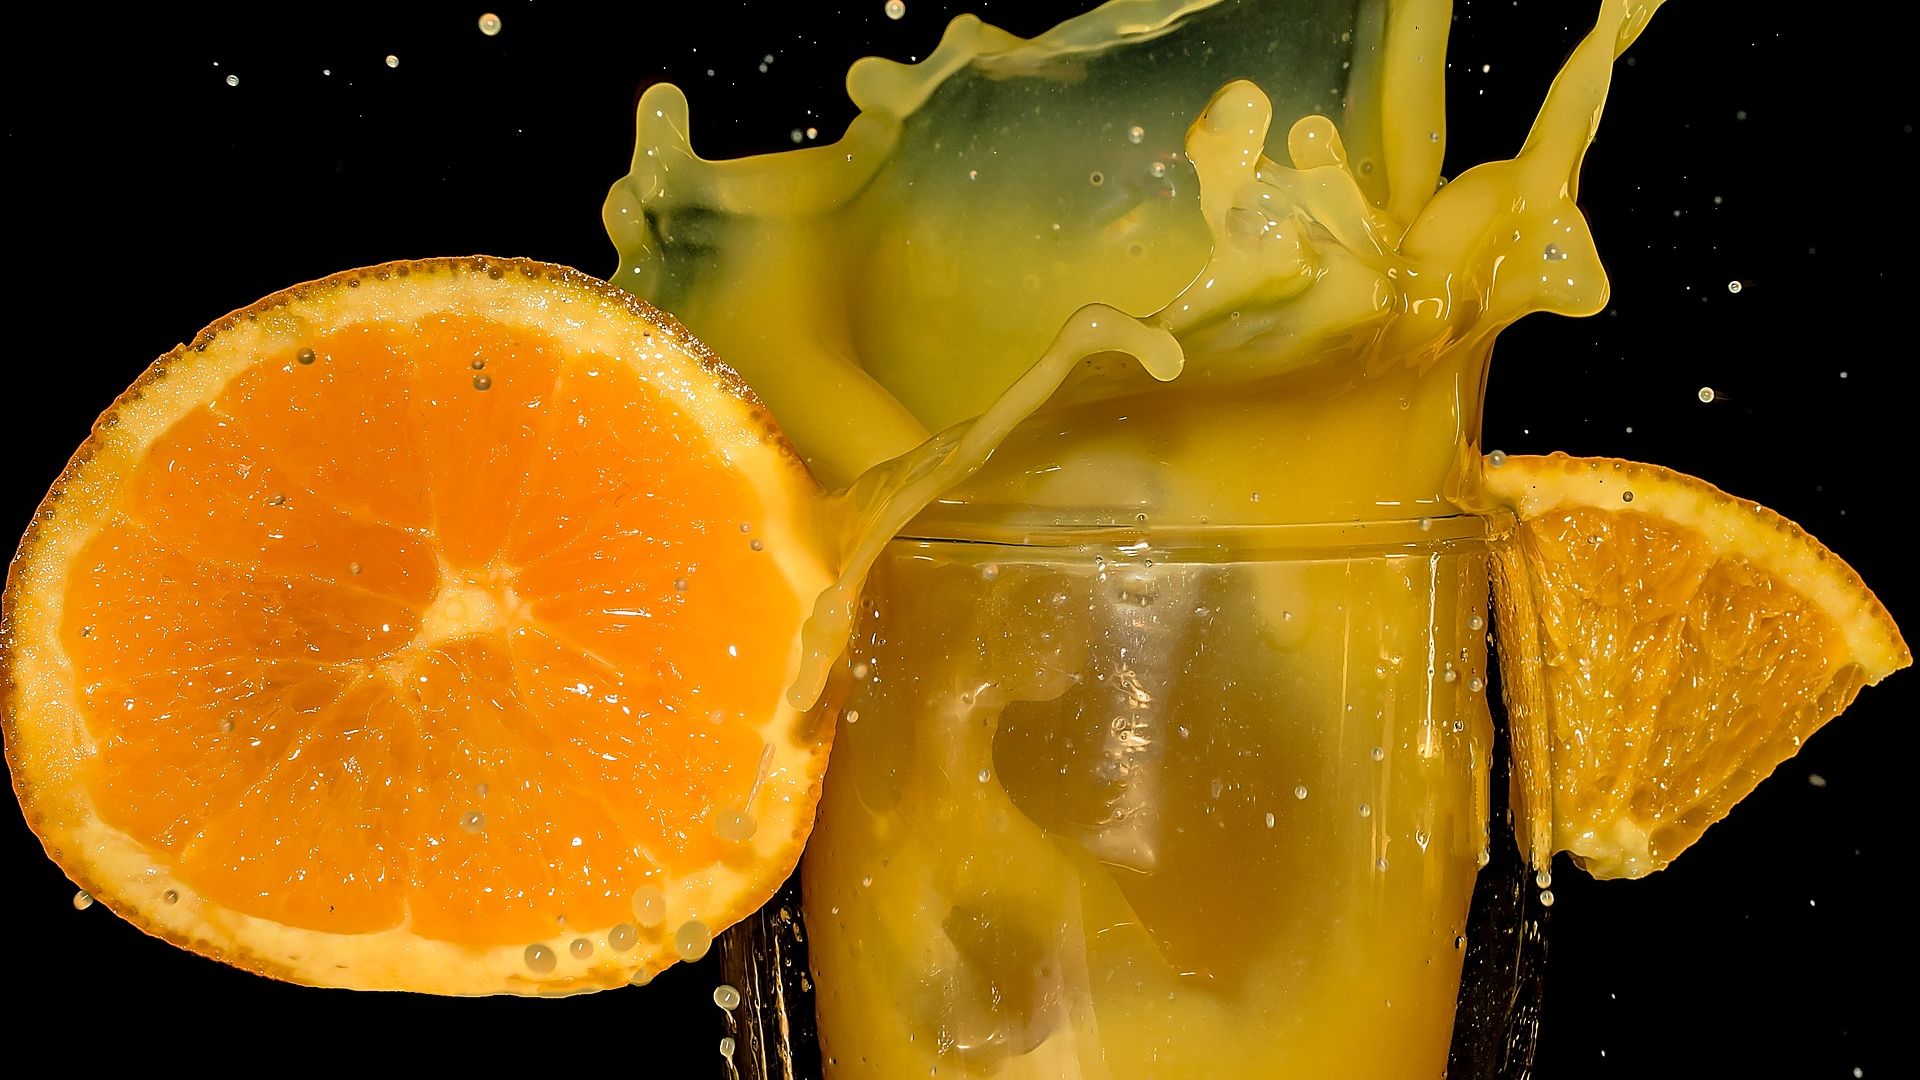 Desktop Wallpaper Orange Juice, Slices, Splashes, Hd Image, Picture,  Background, Lhyezm